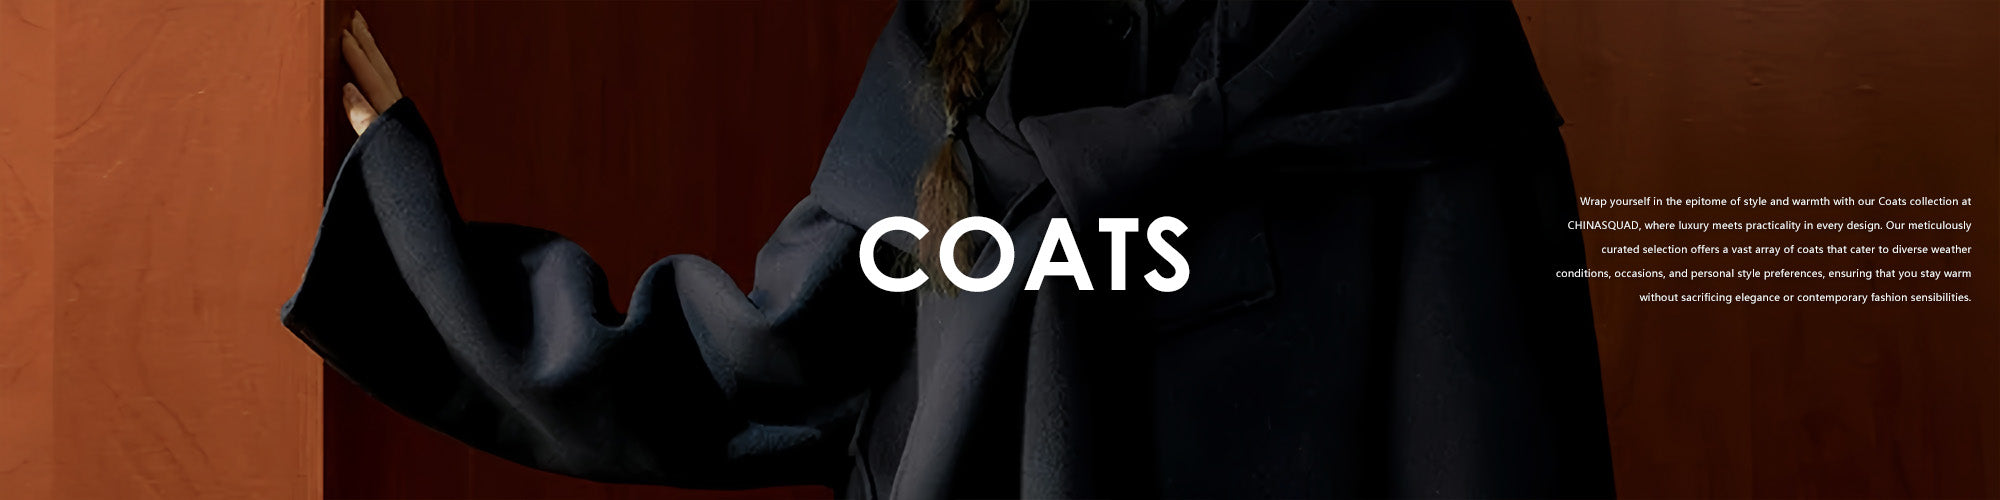 Coats for Women